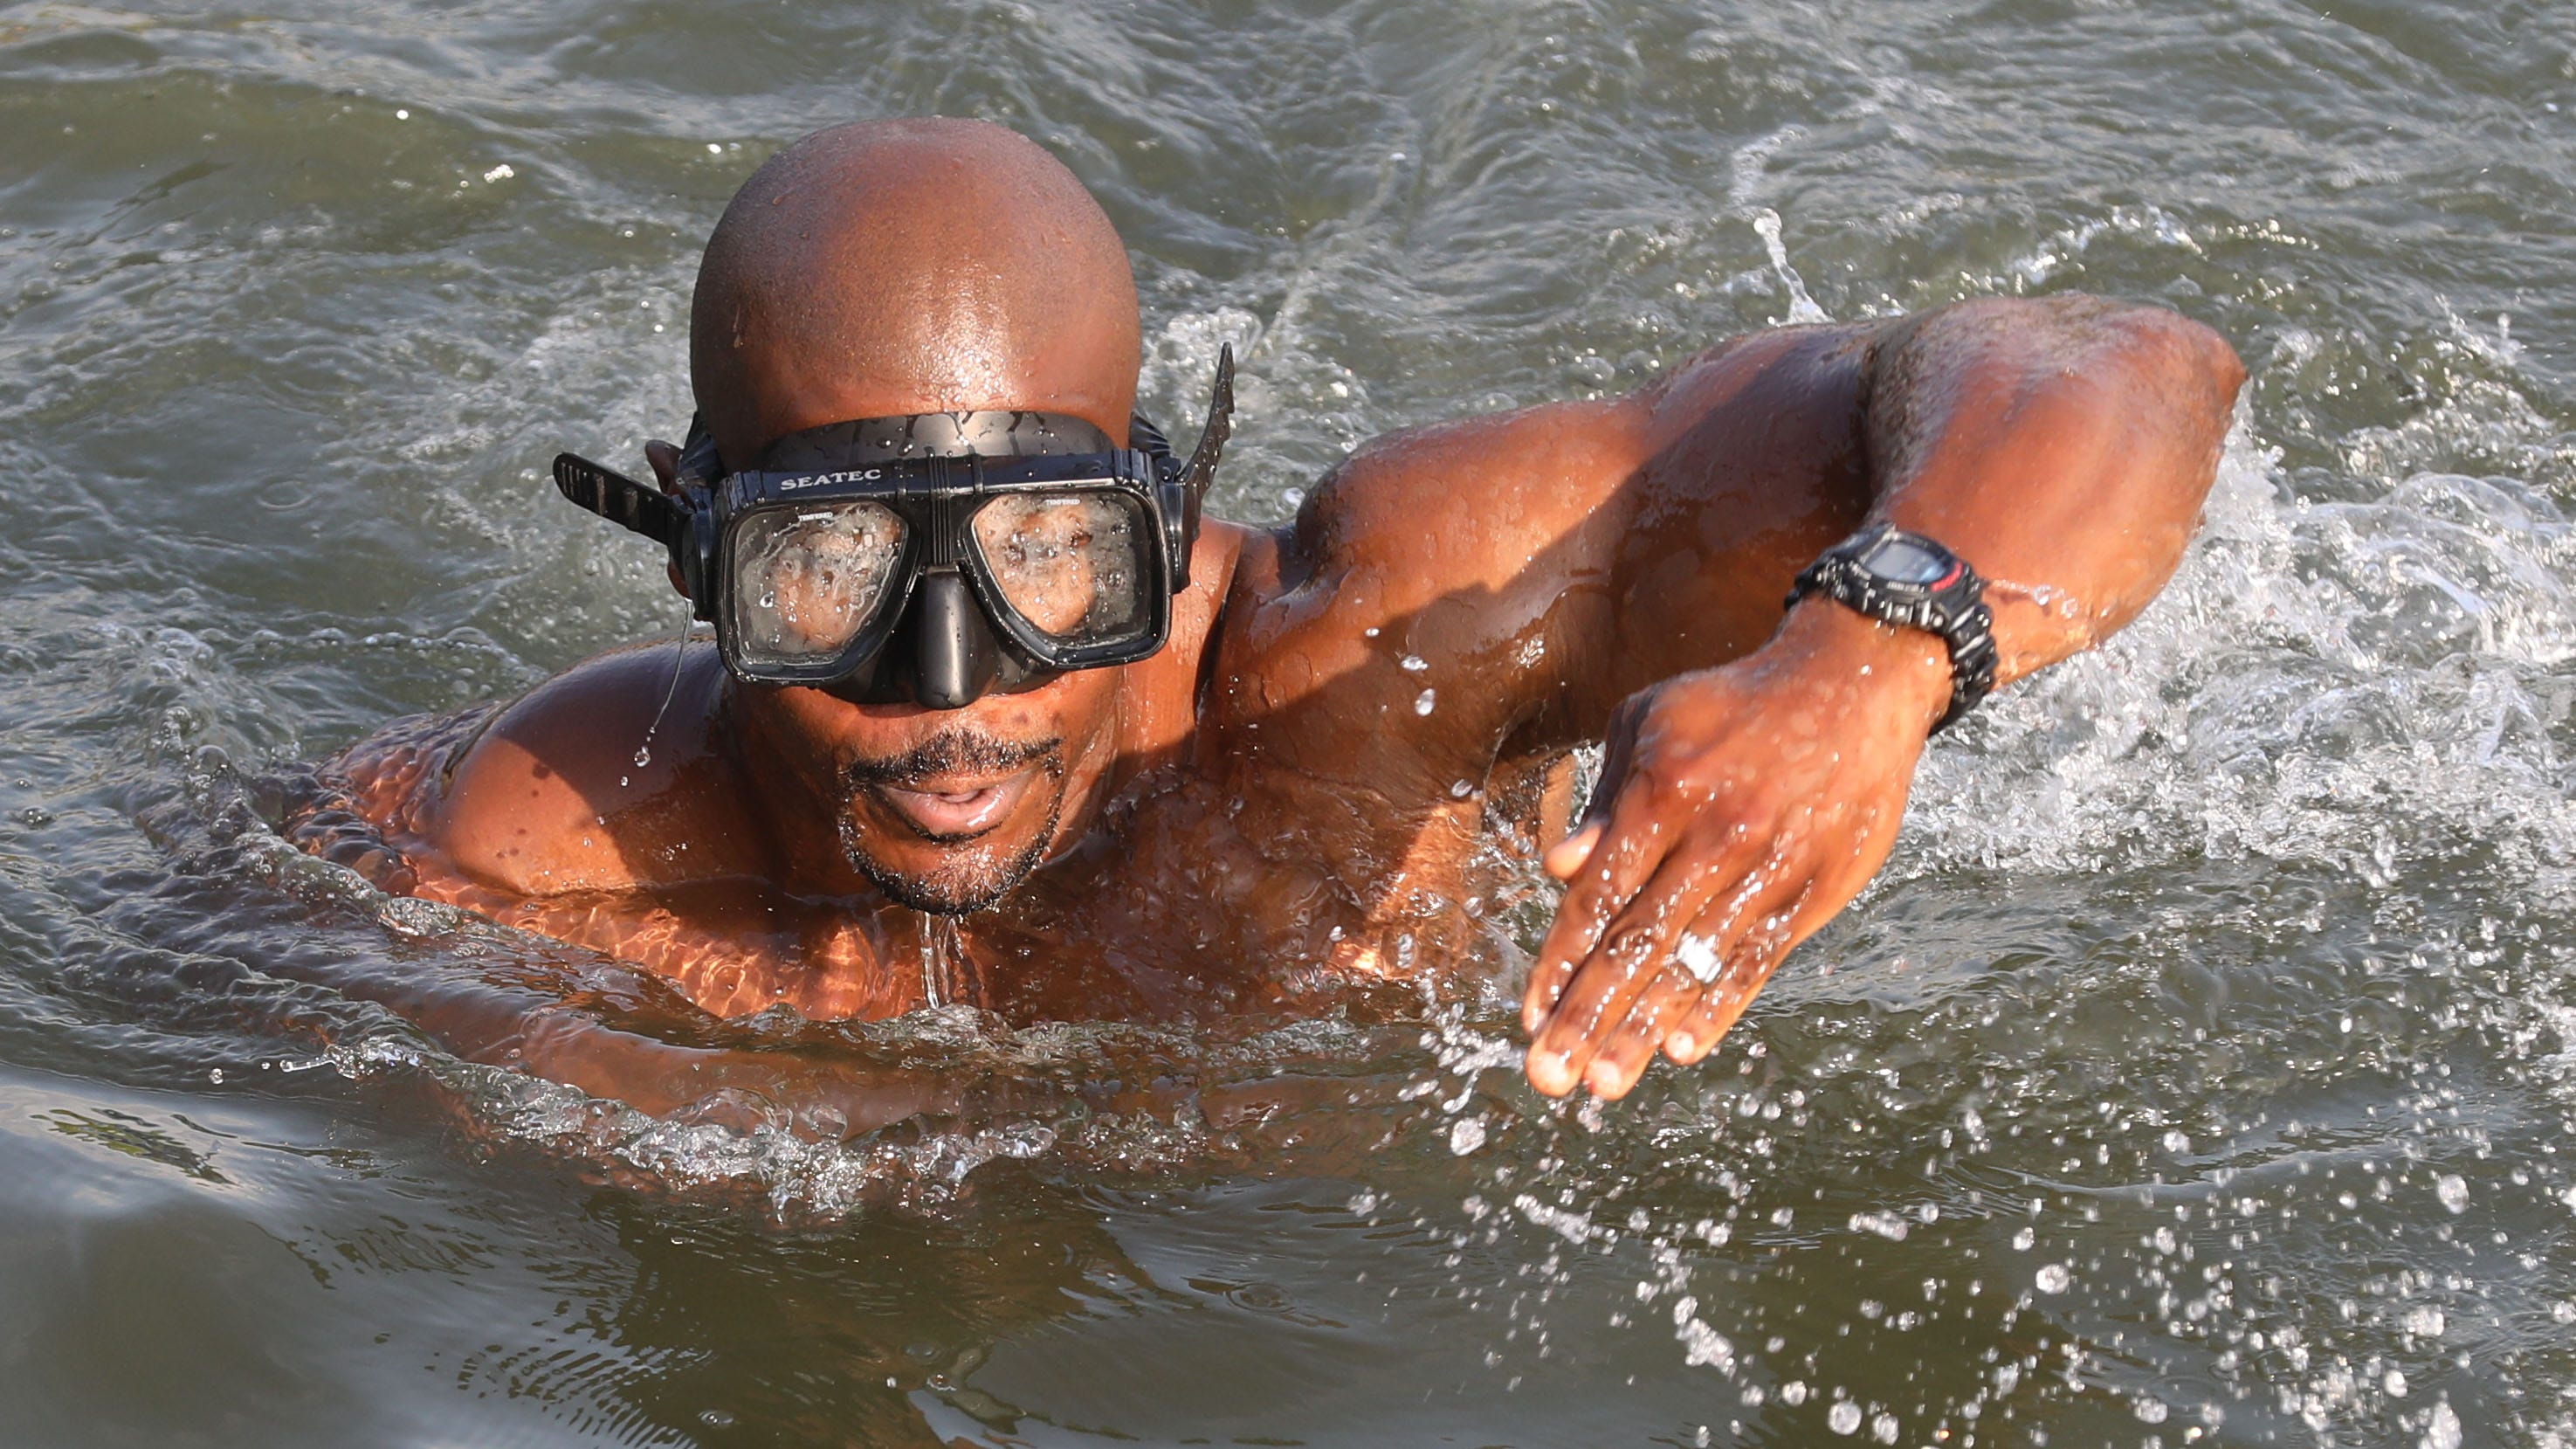 34 Navy SEALs swim across the Hudson River to support veterans